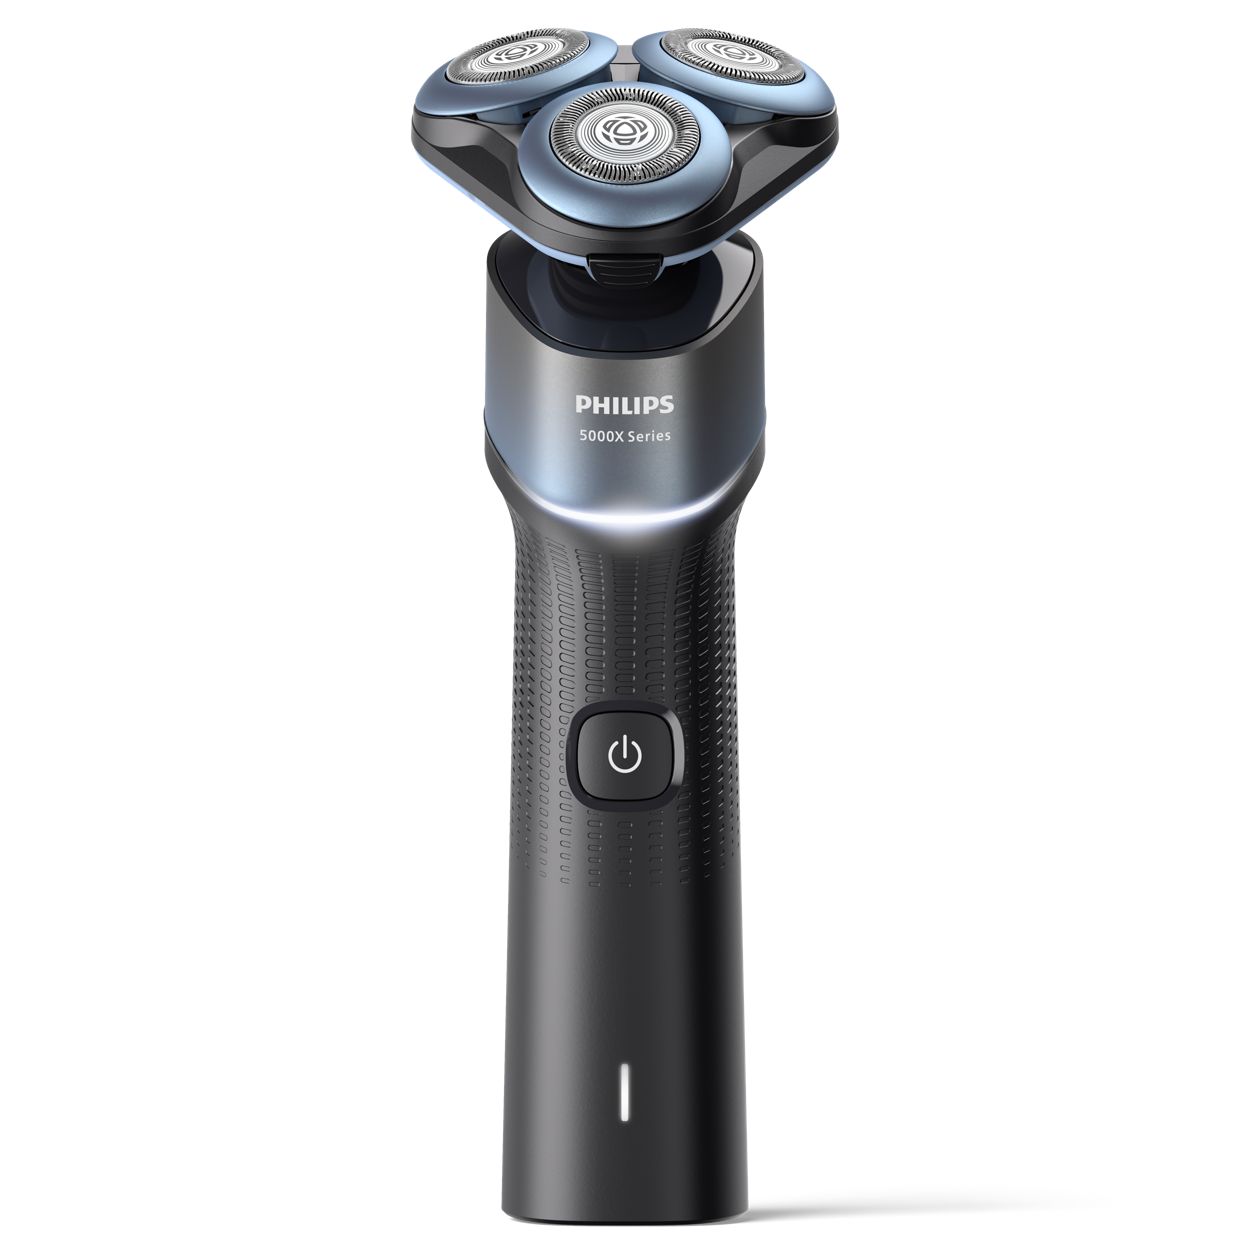 Shaver 5000X series 干湿两用电动剃须刀X5001/00 | Philips -飞利浦